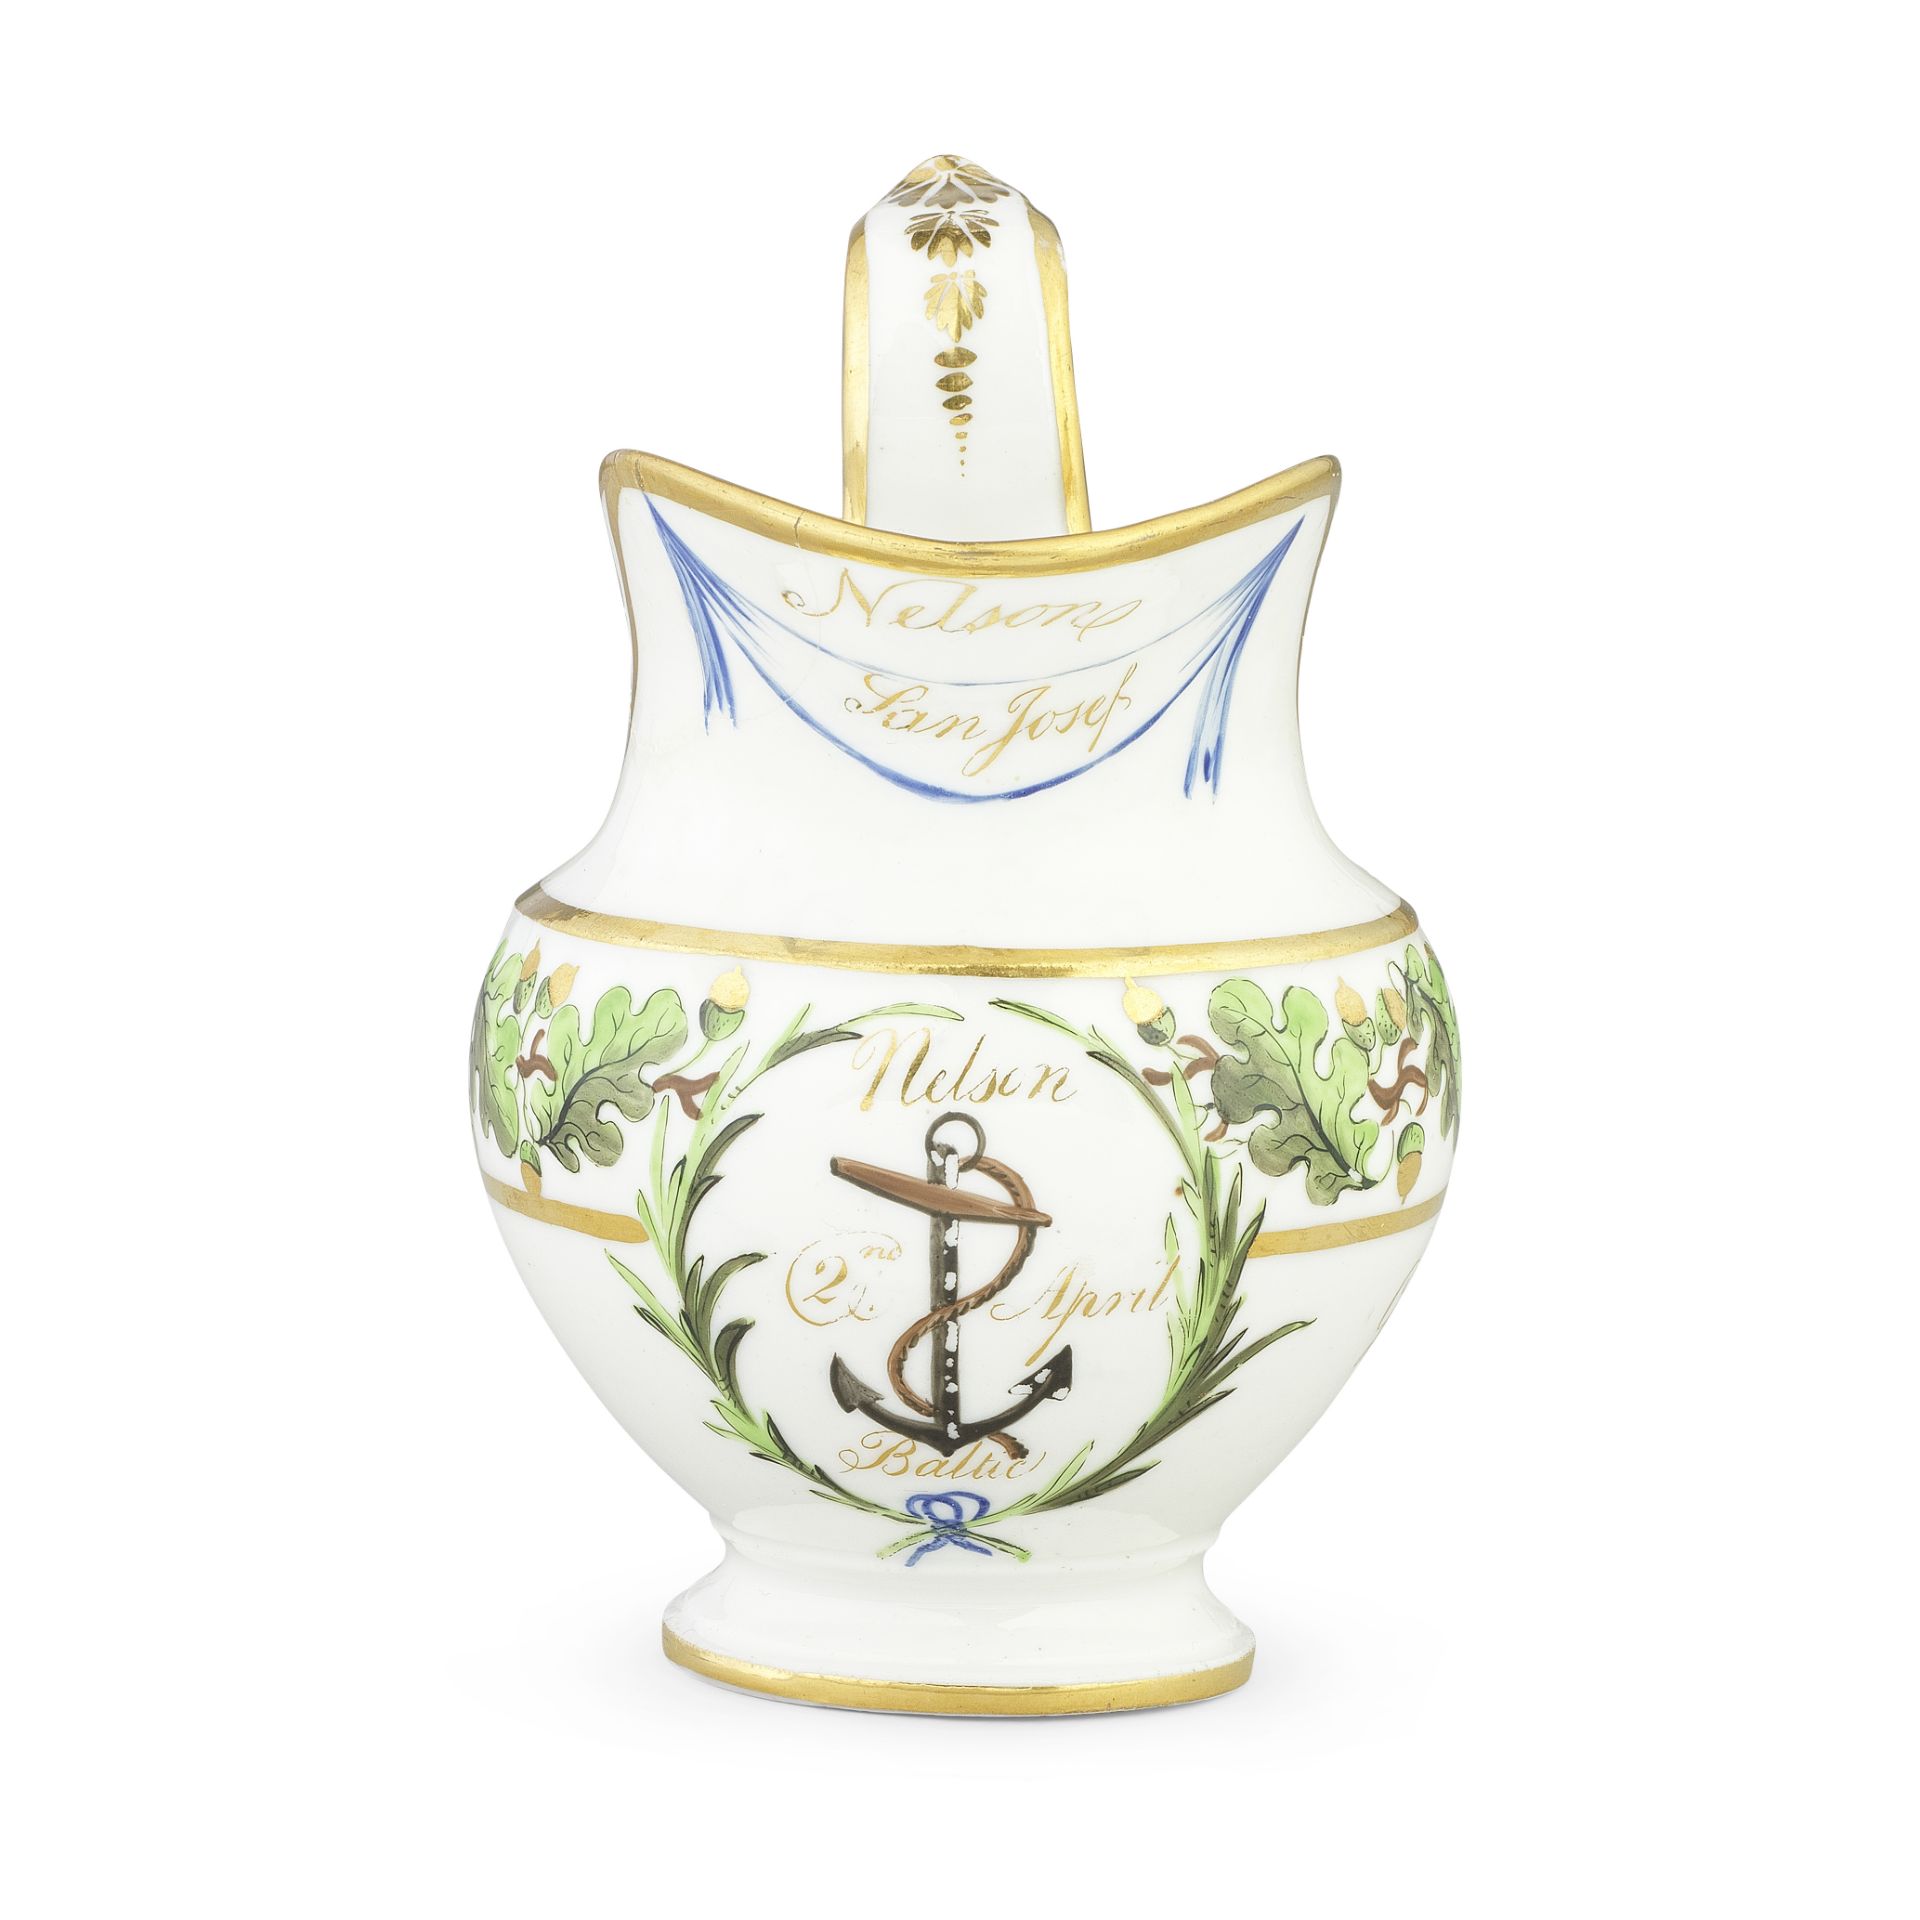 A London-decorated Paris porcelain milk jug from the 'Baltic Service', circa 1802